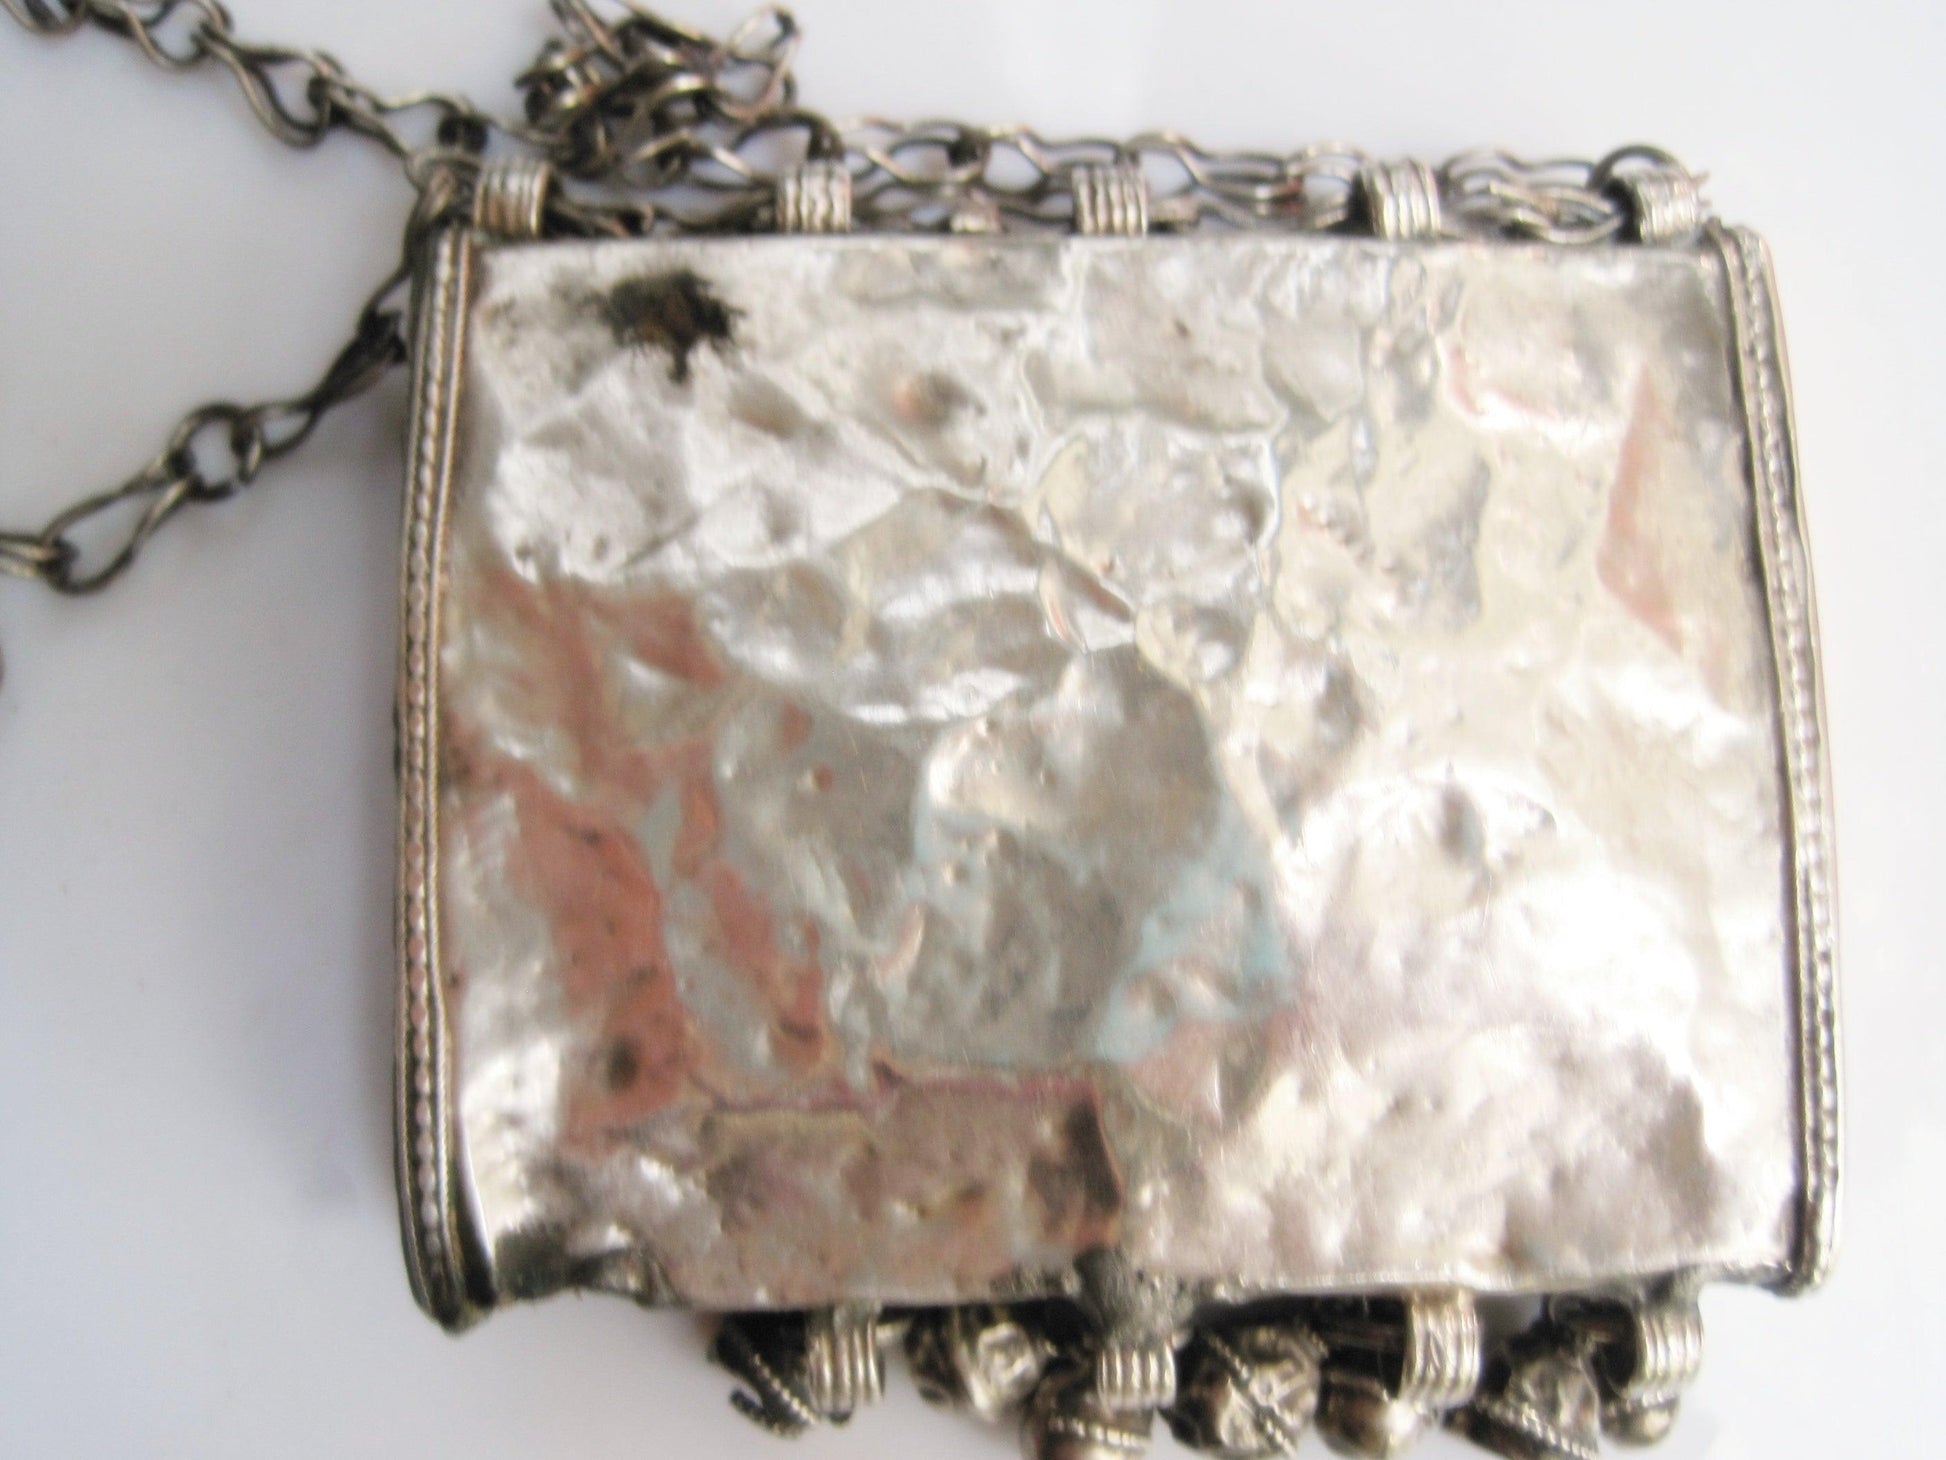 Vintage Silver Islamic Amulet Box from the Arabian Peninsula - Anteeka